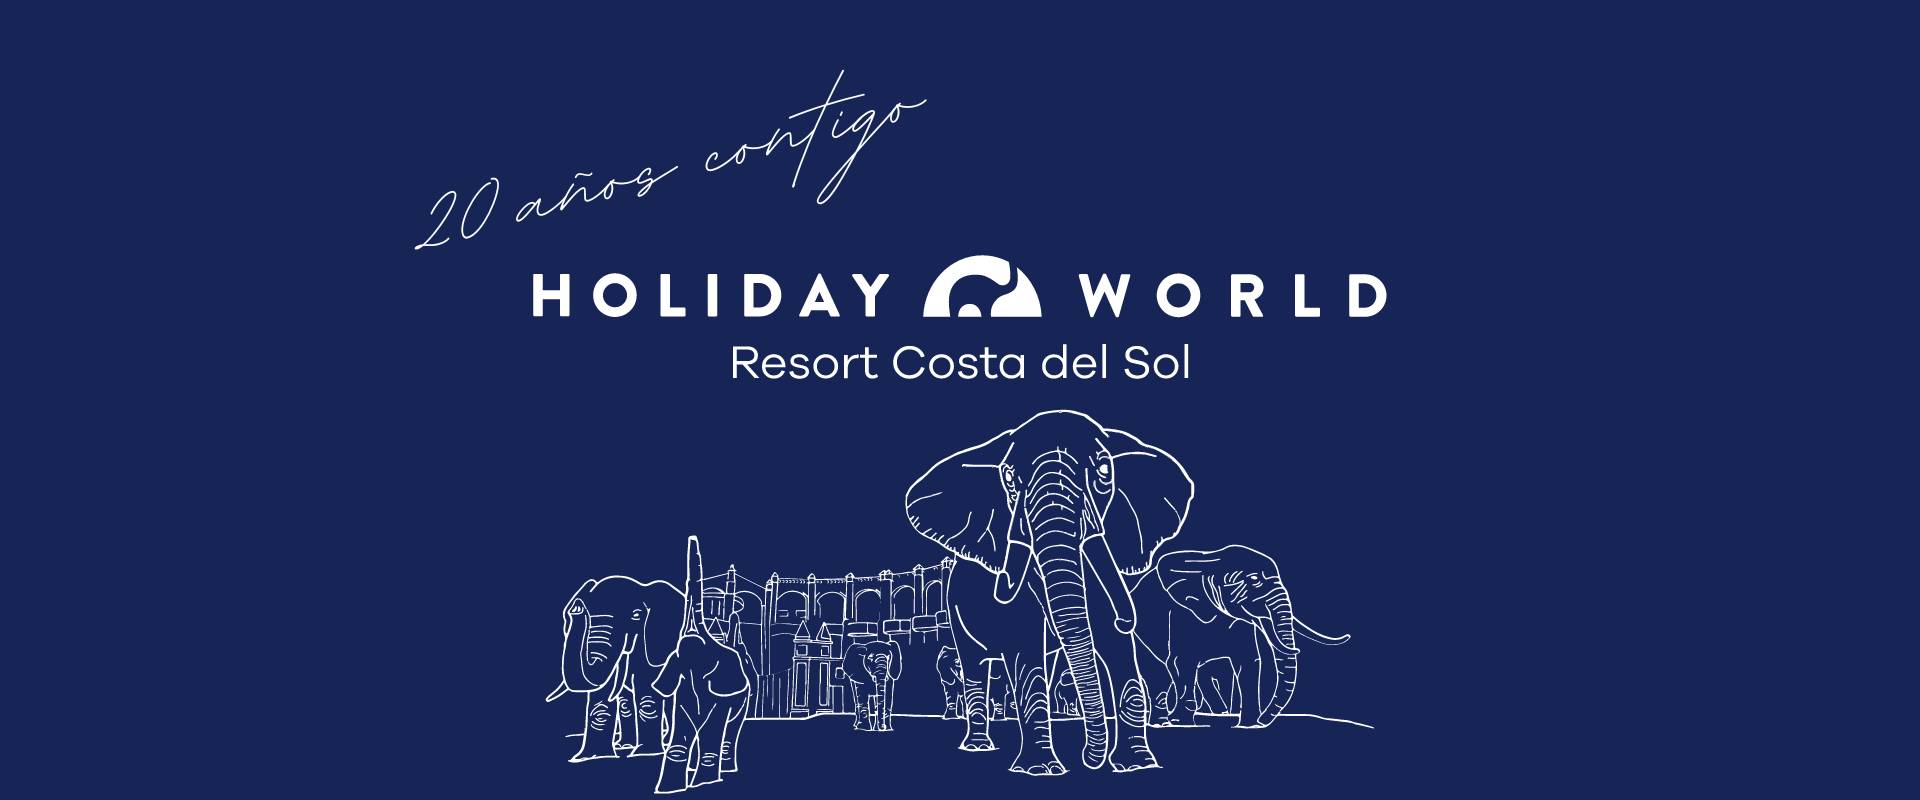 ¡Cumplimos 20 años! Holiday World Resort